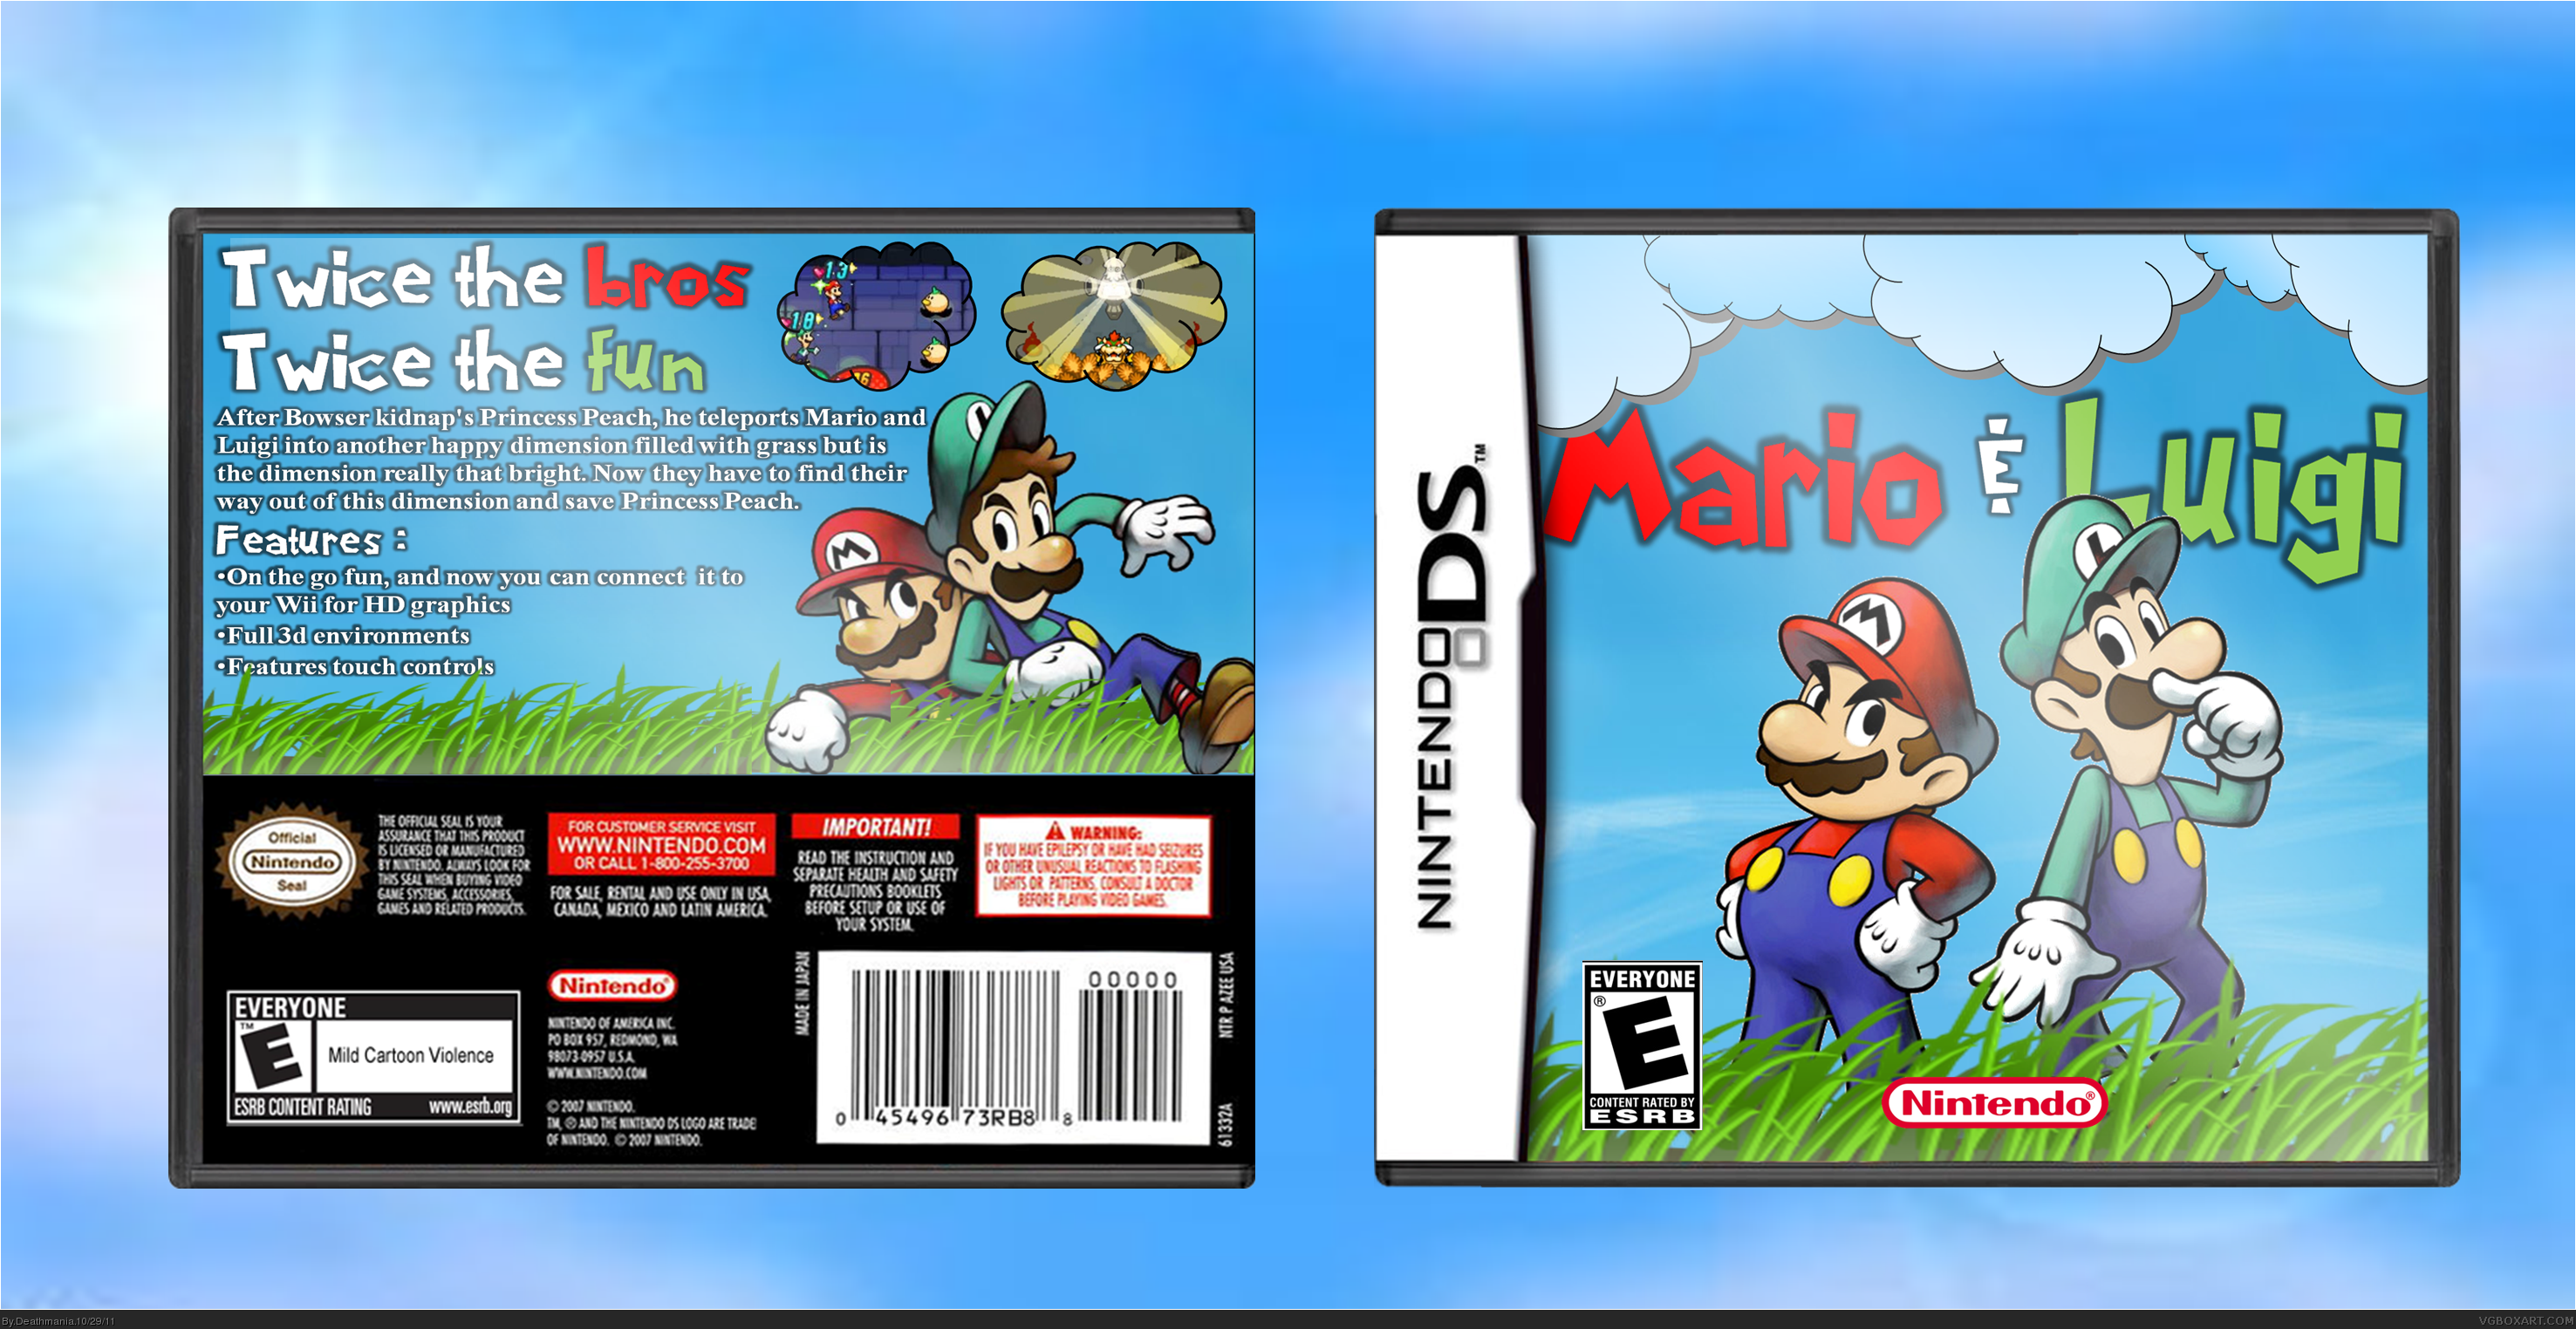 Mario & Luigi box cover